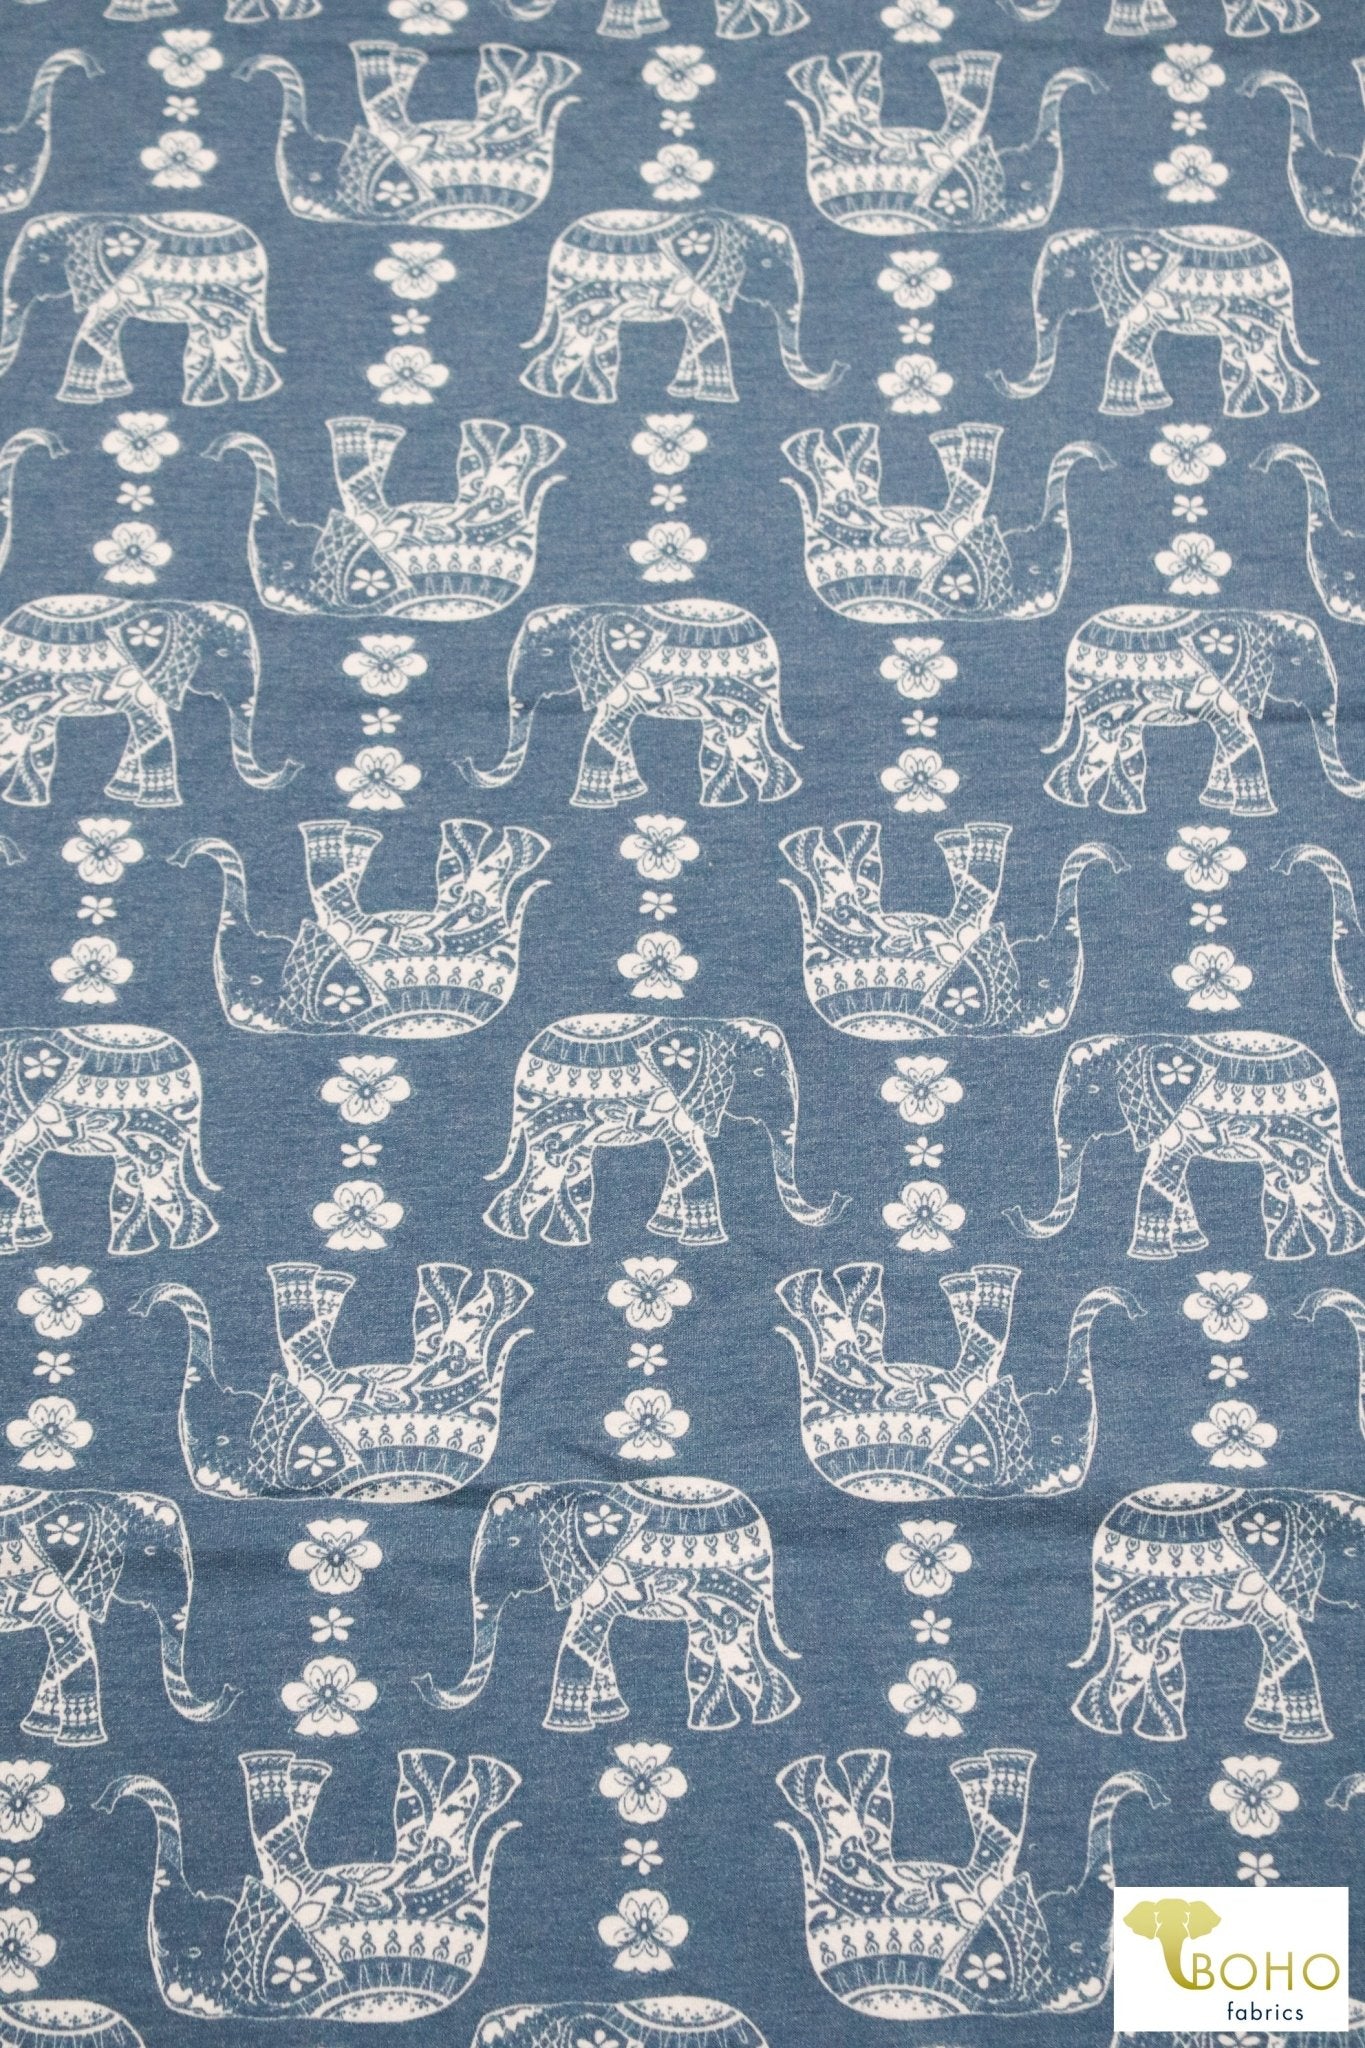 Elephant Parade on Denim Blue, French Terry Knit Print. FTP-326-BLU - Boho Fabrics